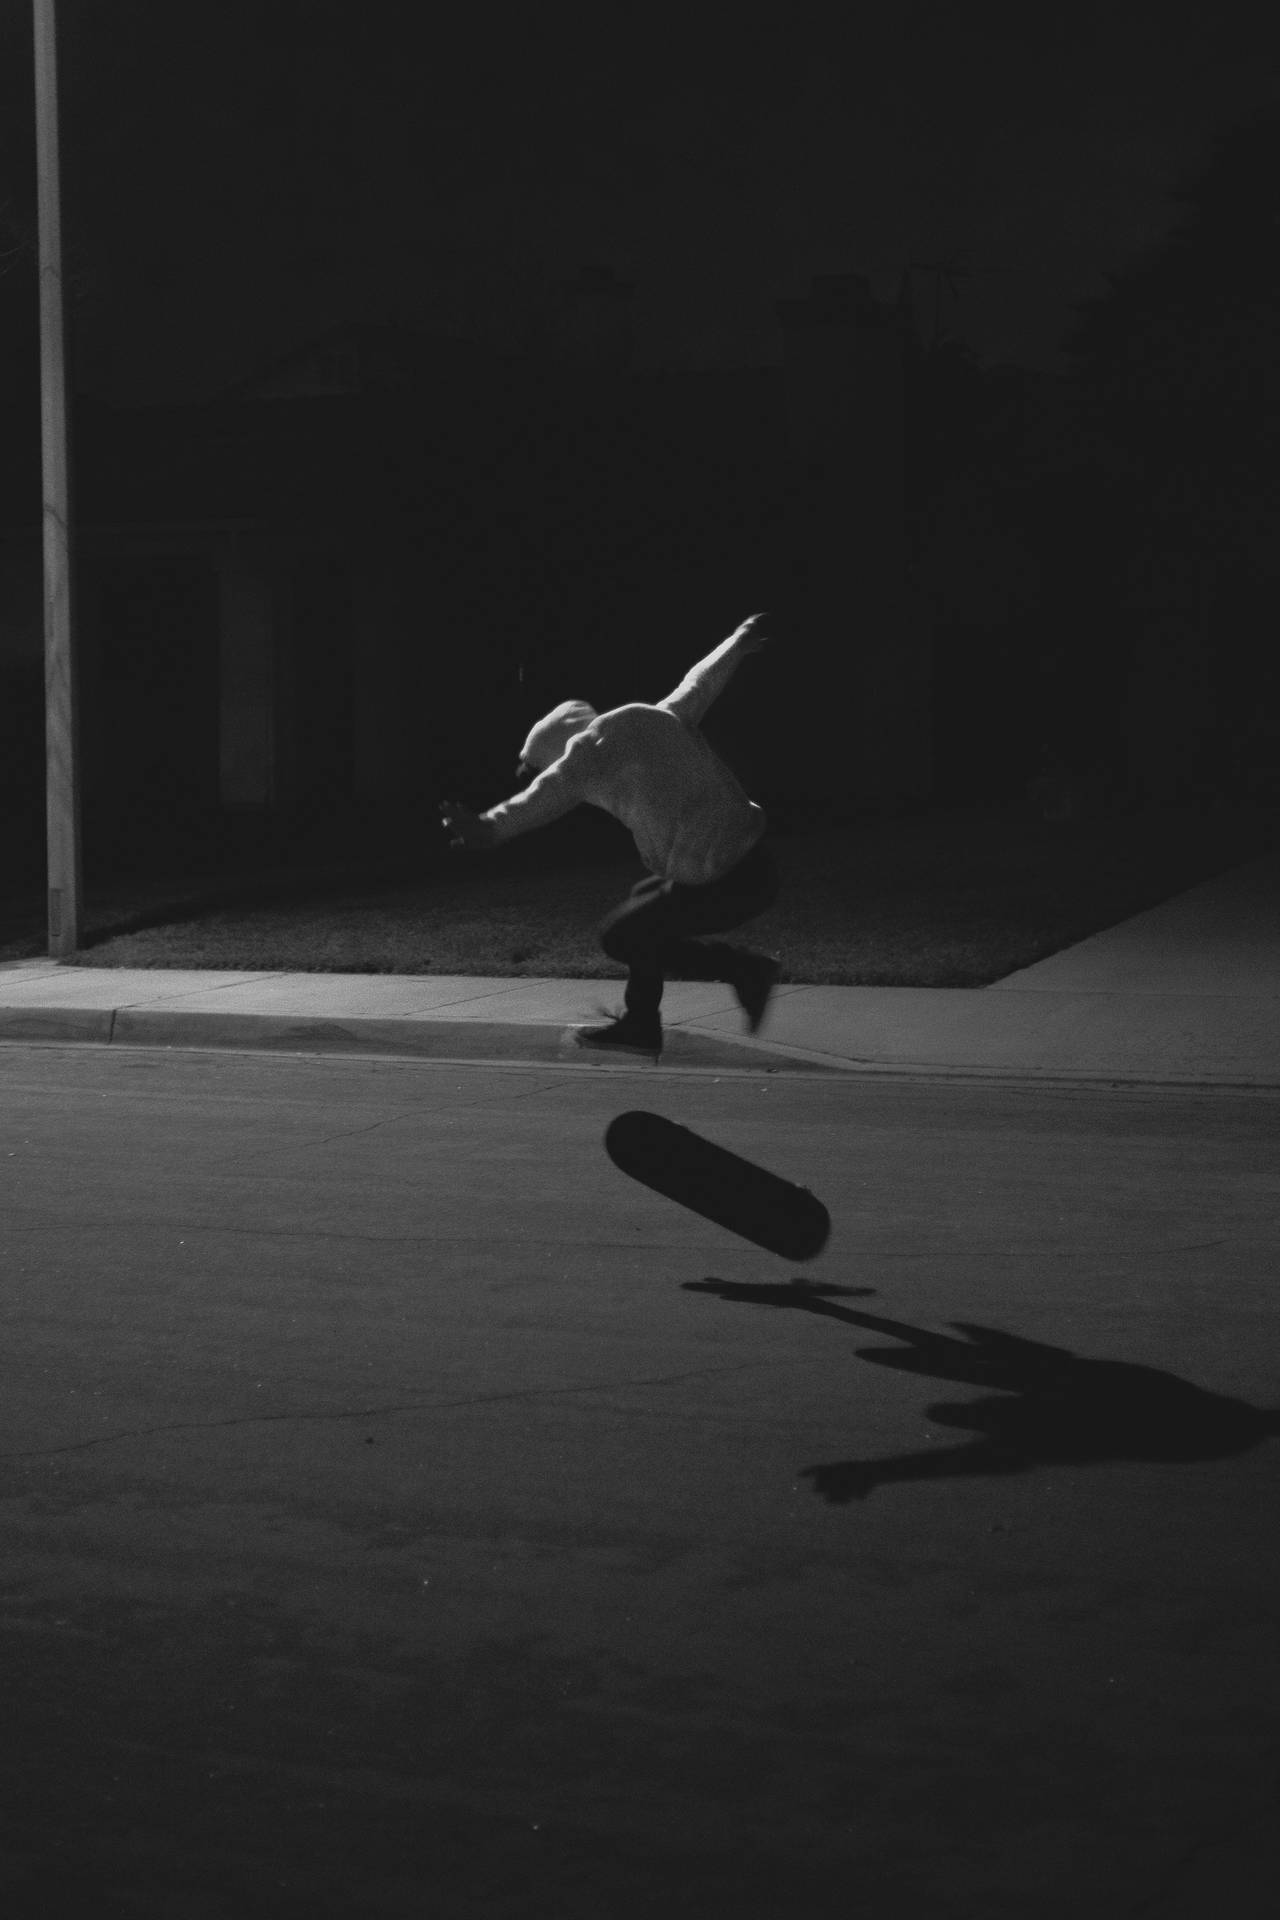 Skater Boy's Nighttime Ride